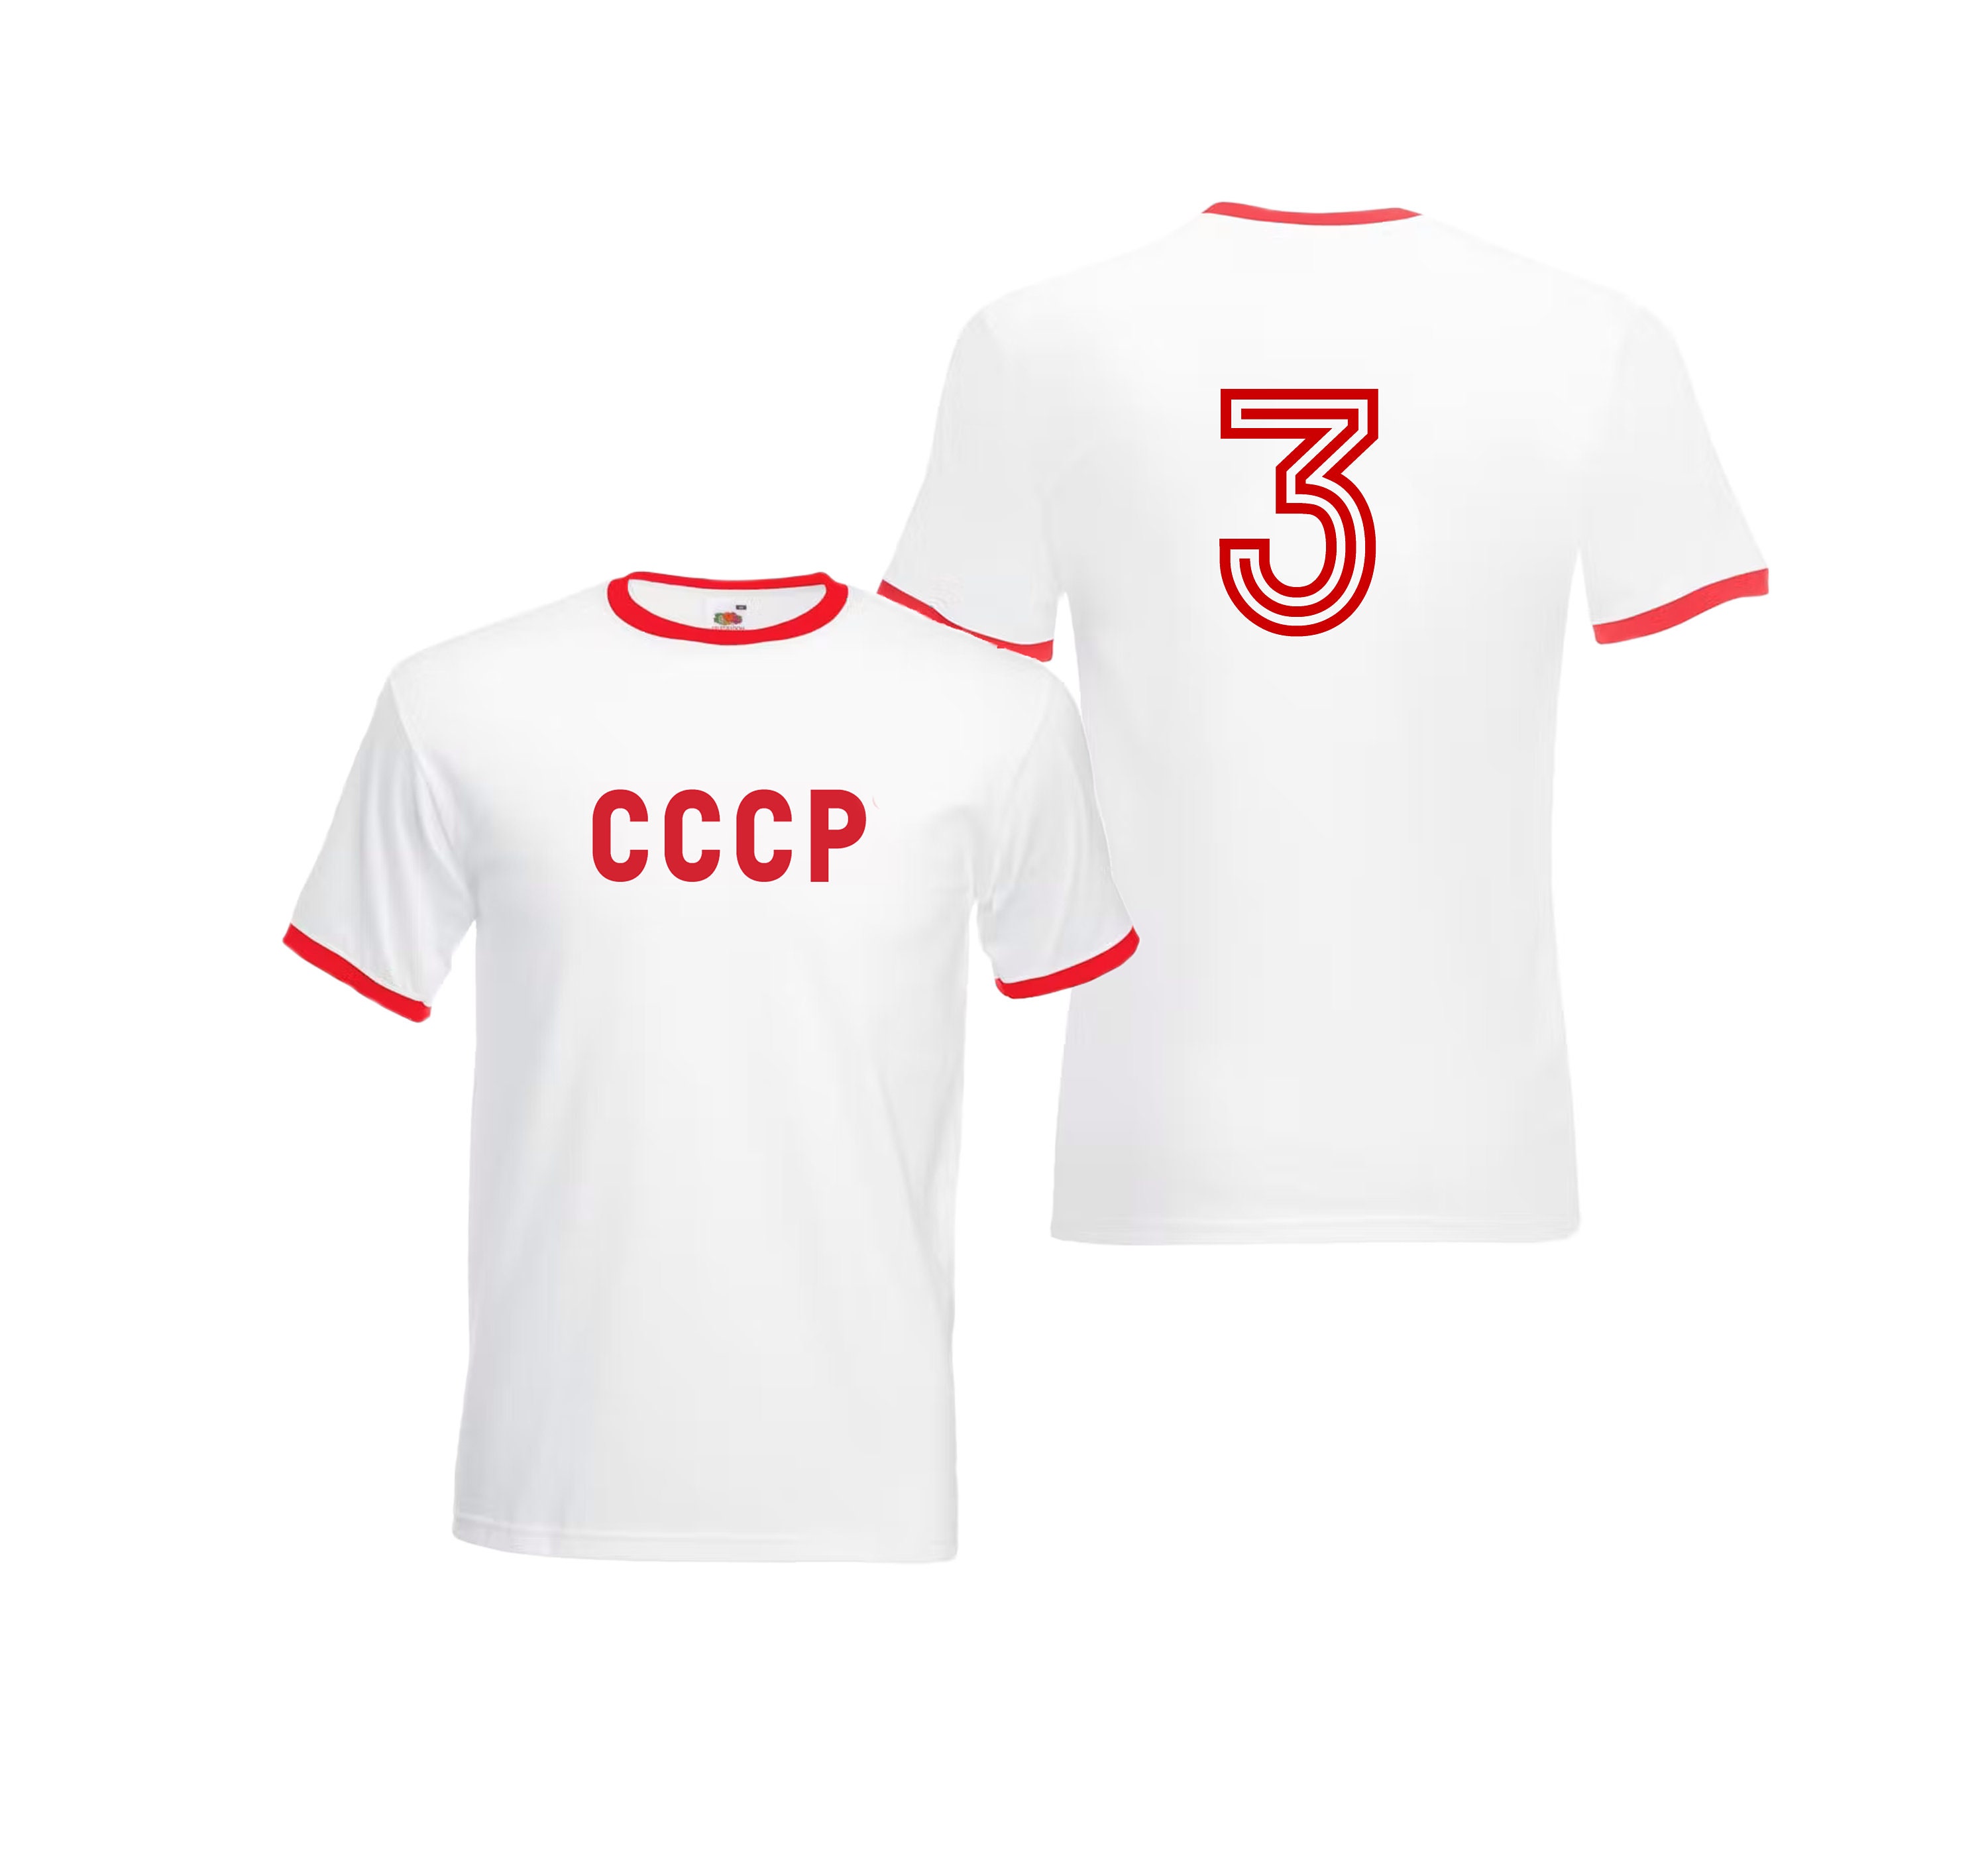 Retro Classic 1987 1988 1989 1990 1991 Soccer Jerseys CCCP Union Of Soviet  Socialist Republics USSR Retro Football Shirt From Xx233792844, $14.67